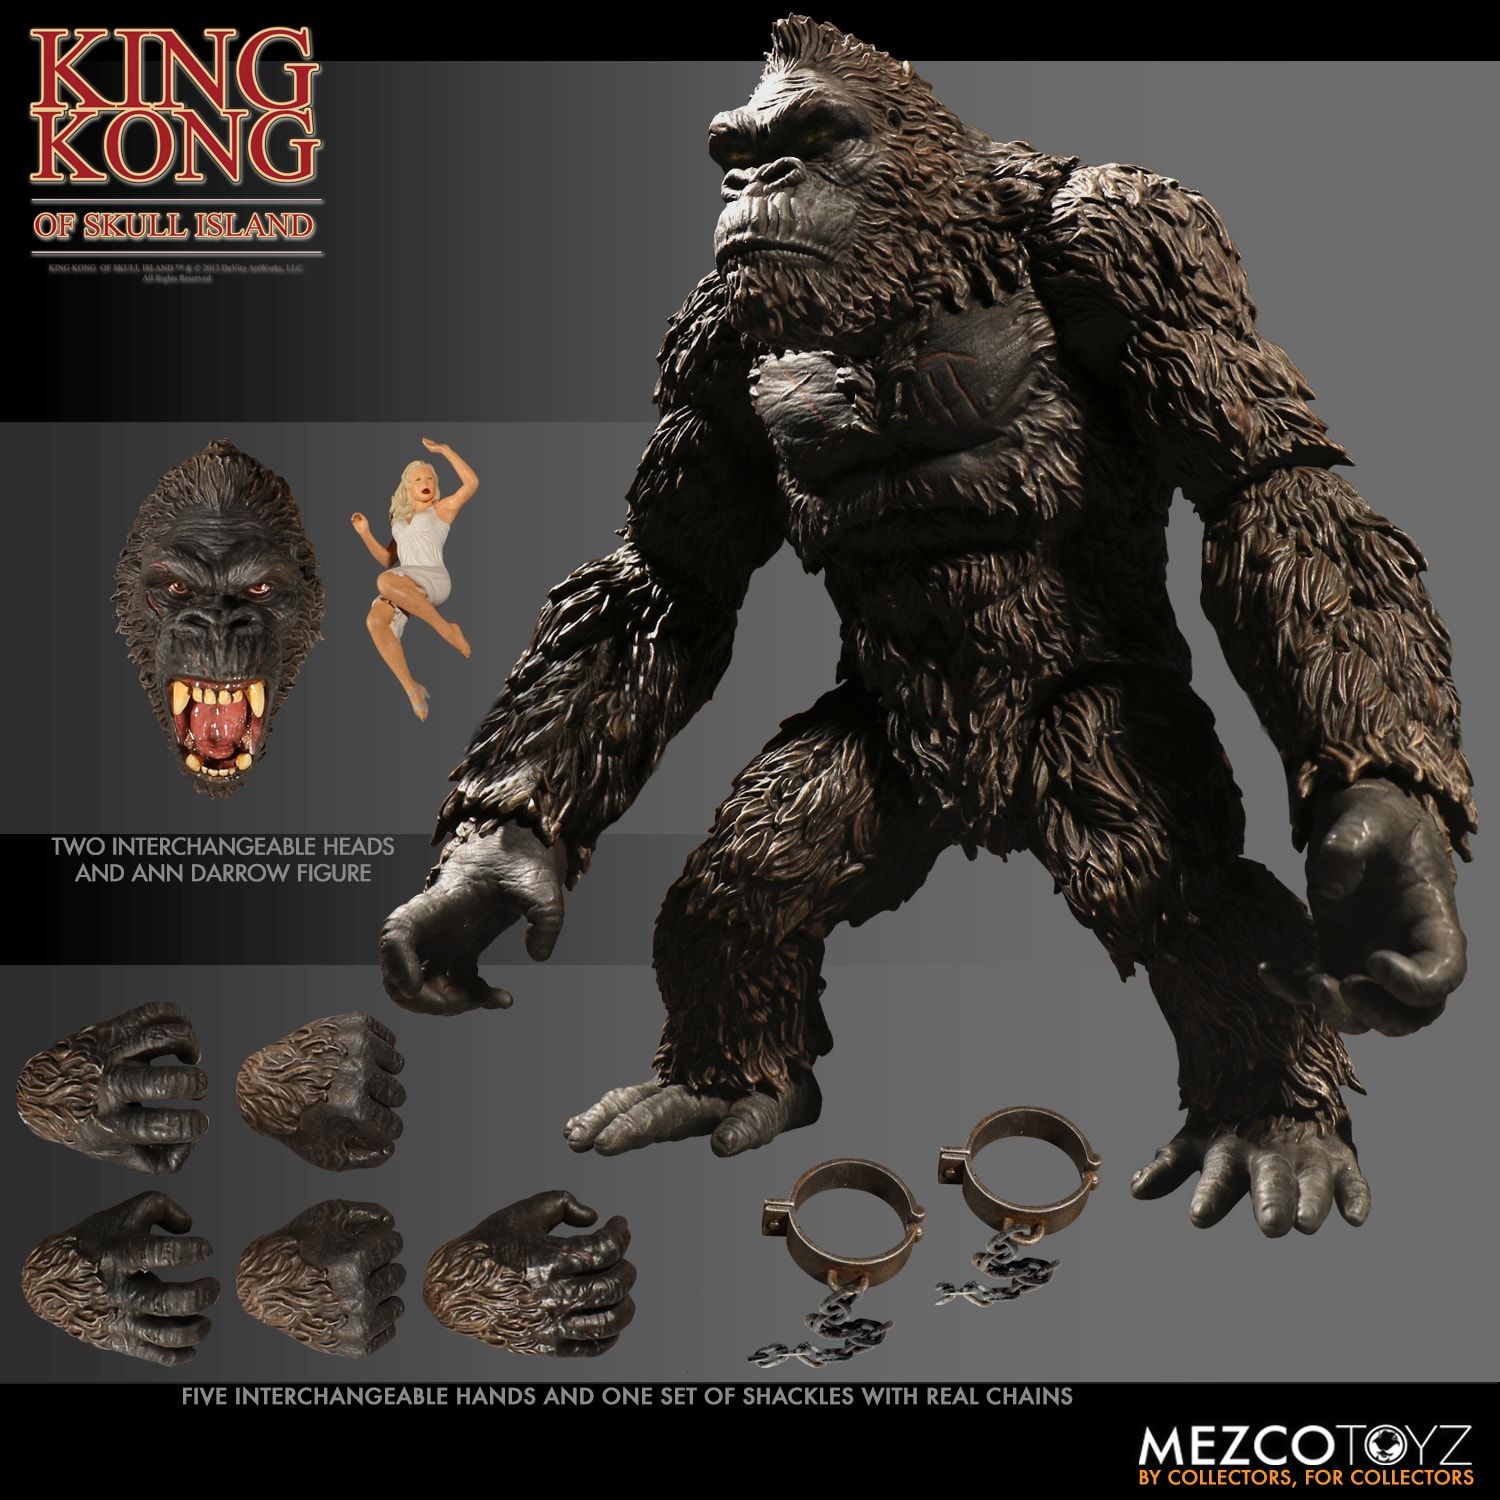 Mezco King Kong Of Skull Island 7 Inch Action Figure